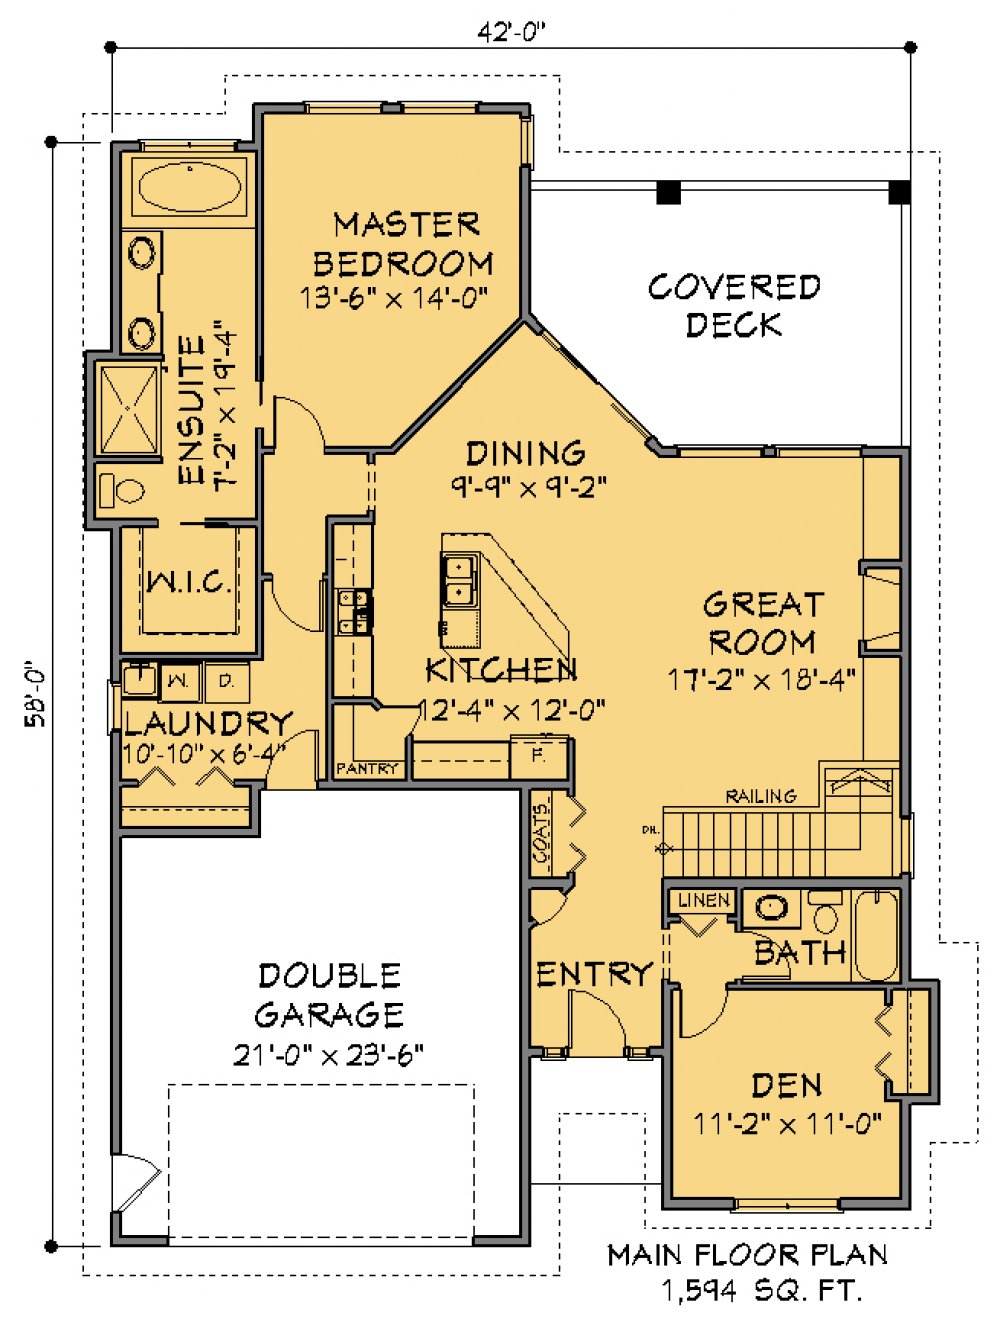 House Plan E1340-10  Main Floor Plan